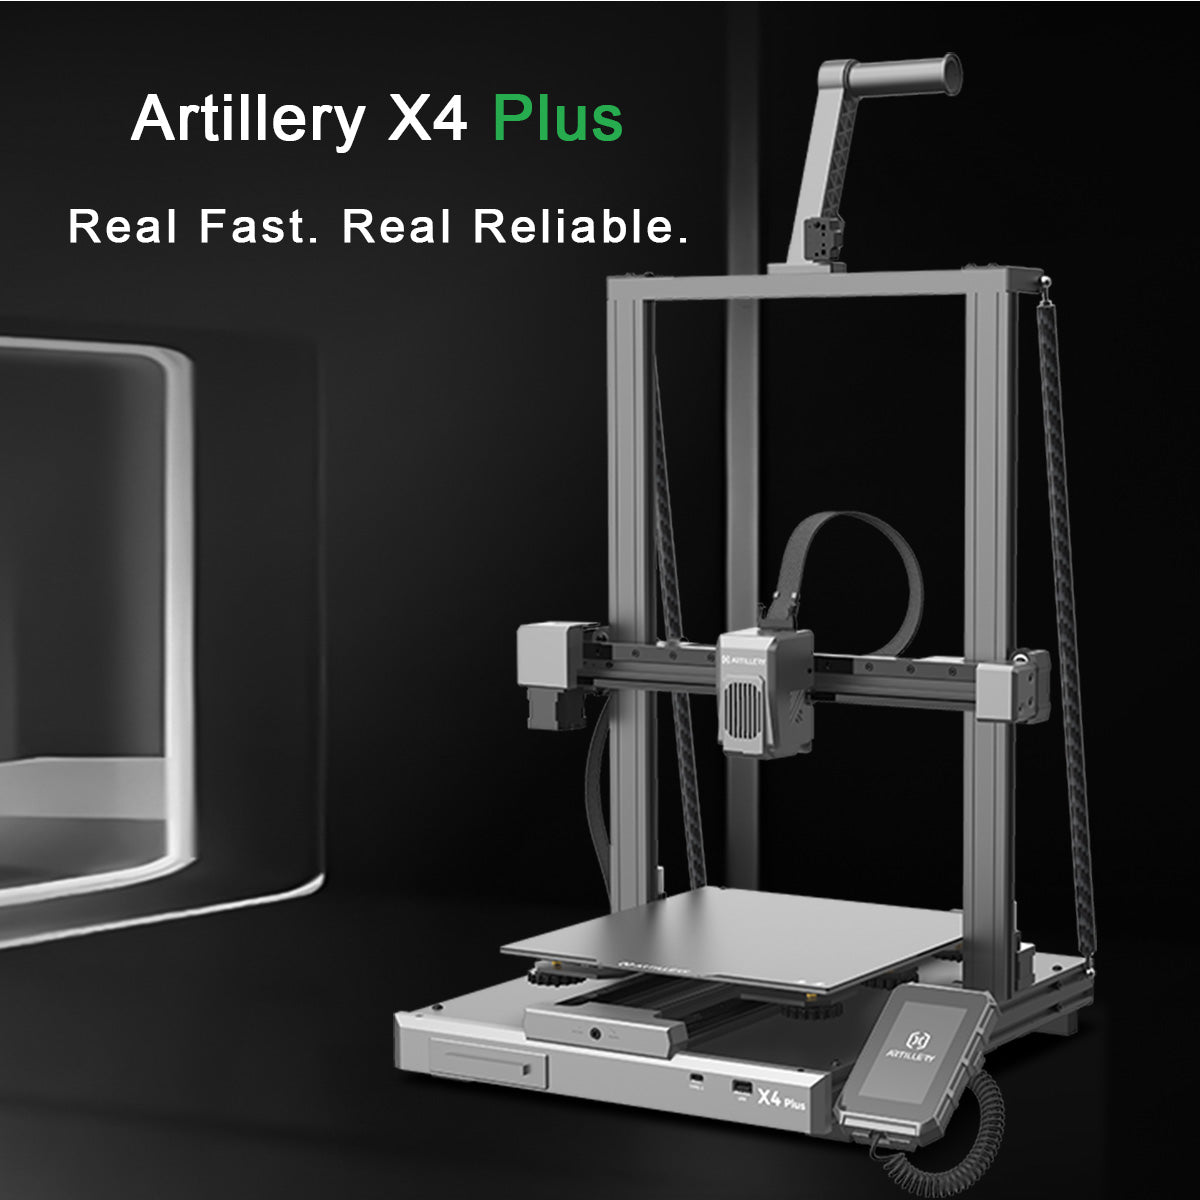 Introducing Sidewinder X4 Plus-Large Build Size Klipper 3D Printer